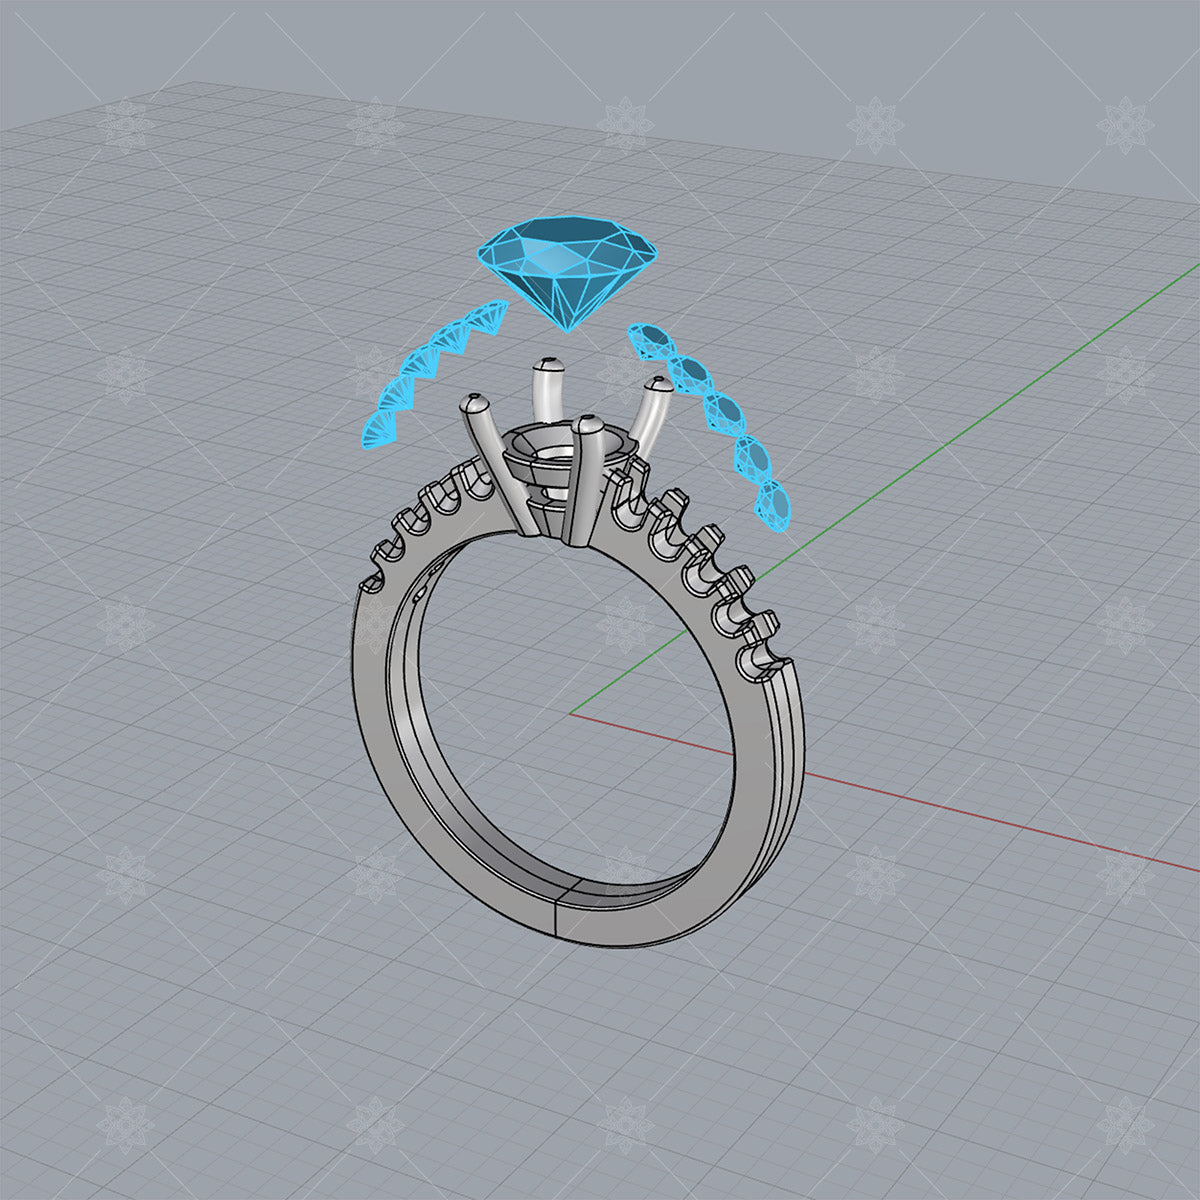 Jewelry CAD Service 3D Jewelry Design Service, CAD Model of Your Jewelry,  Custom Design of Your Jewelry - Etsy